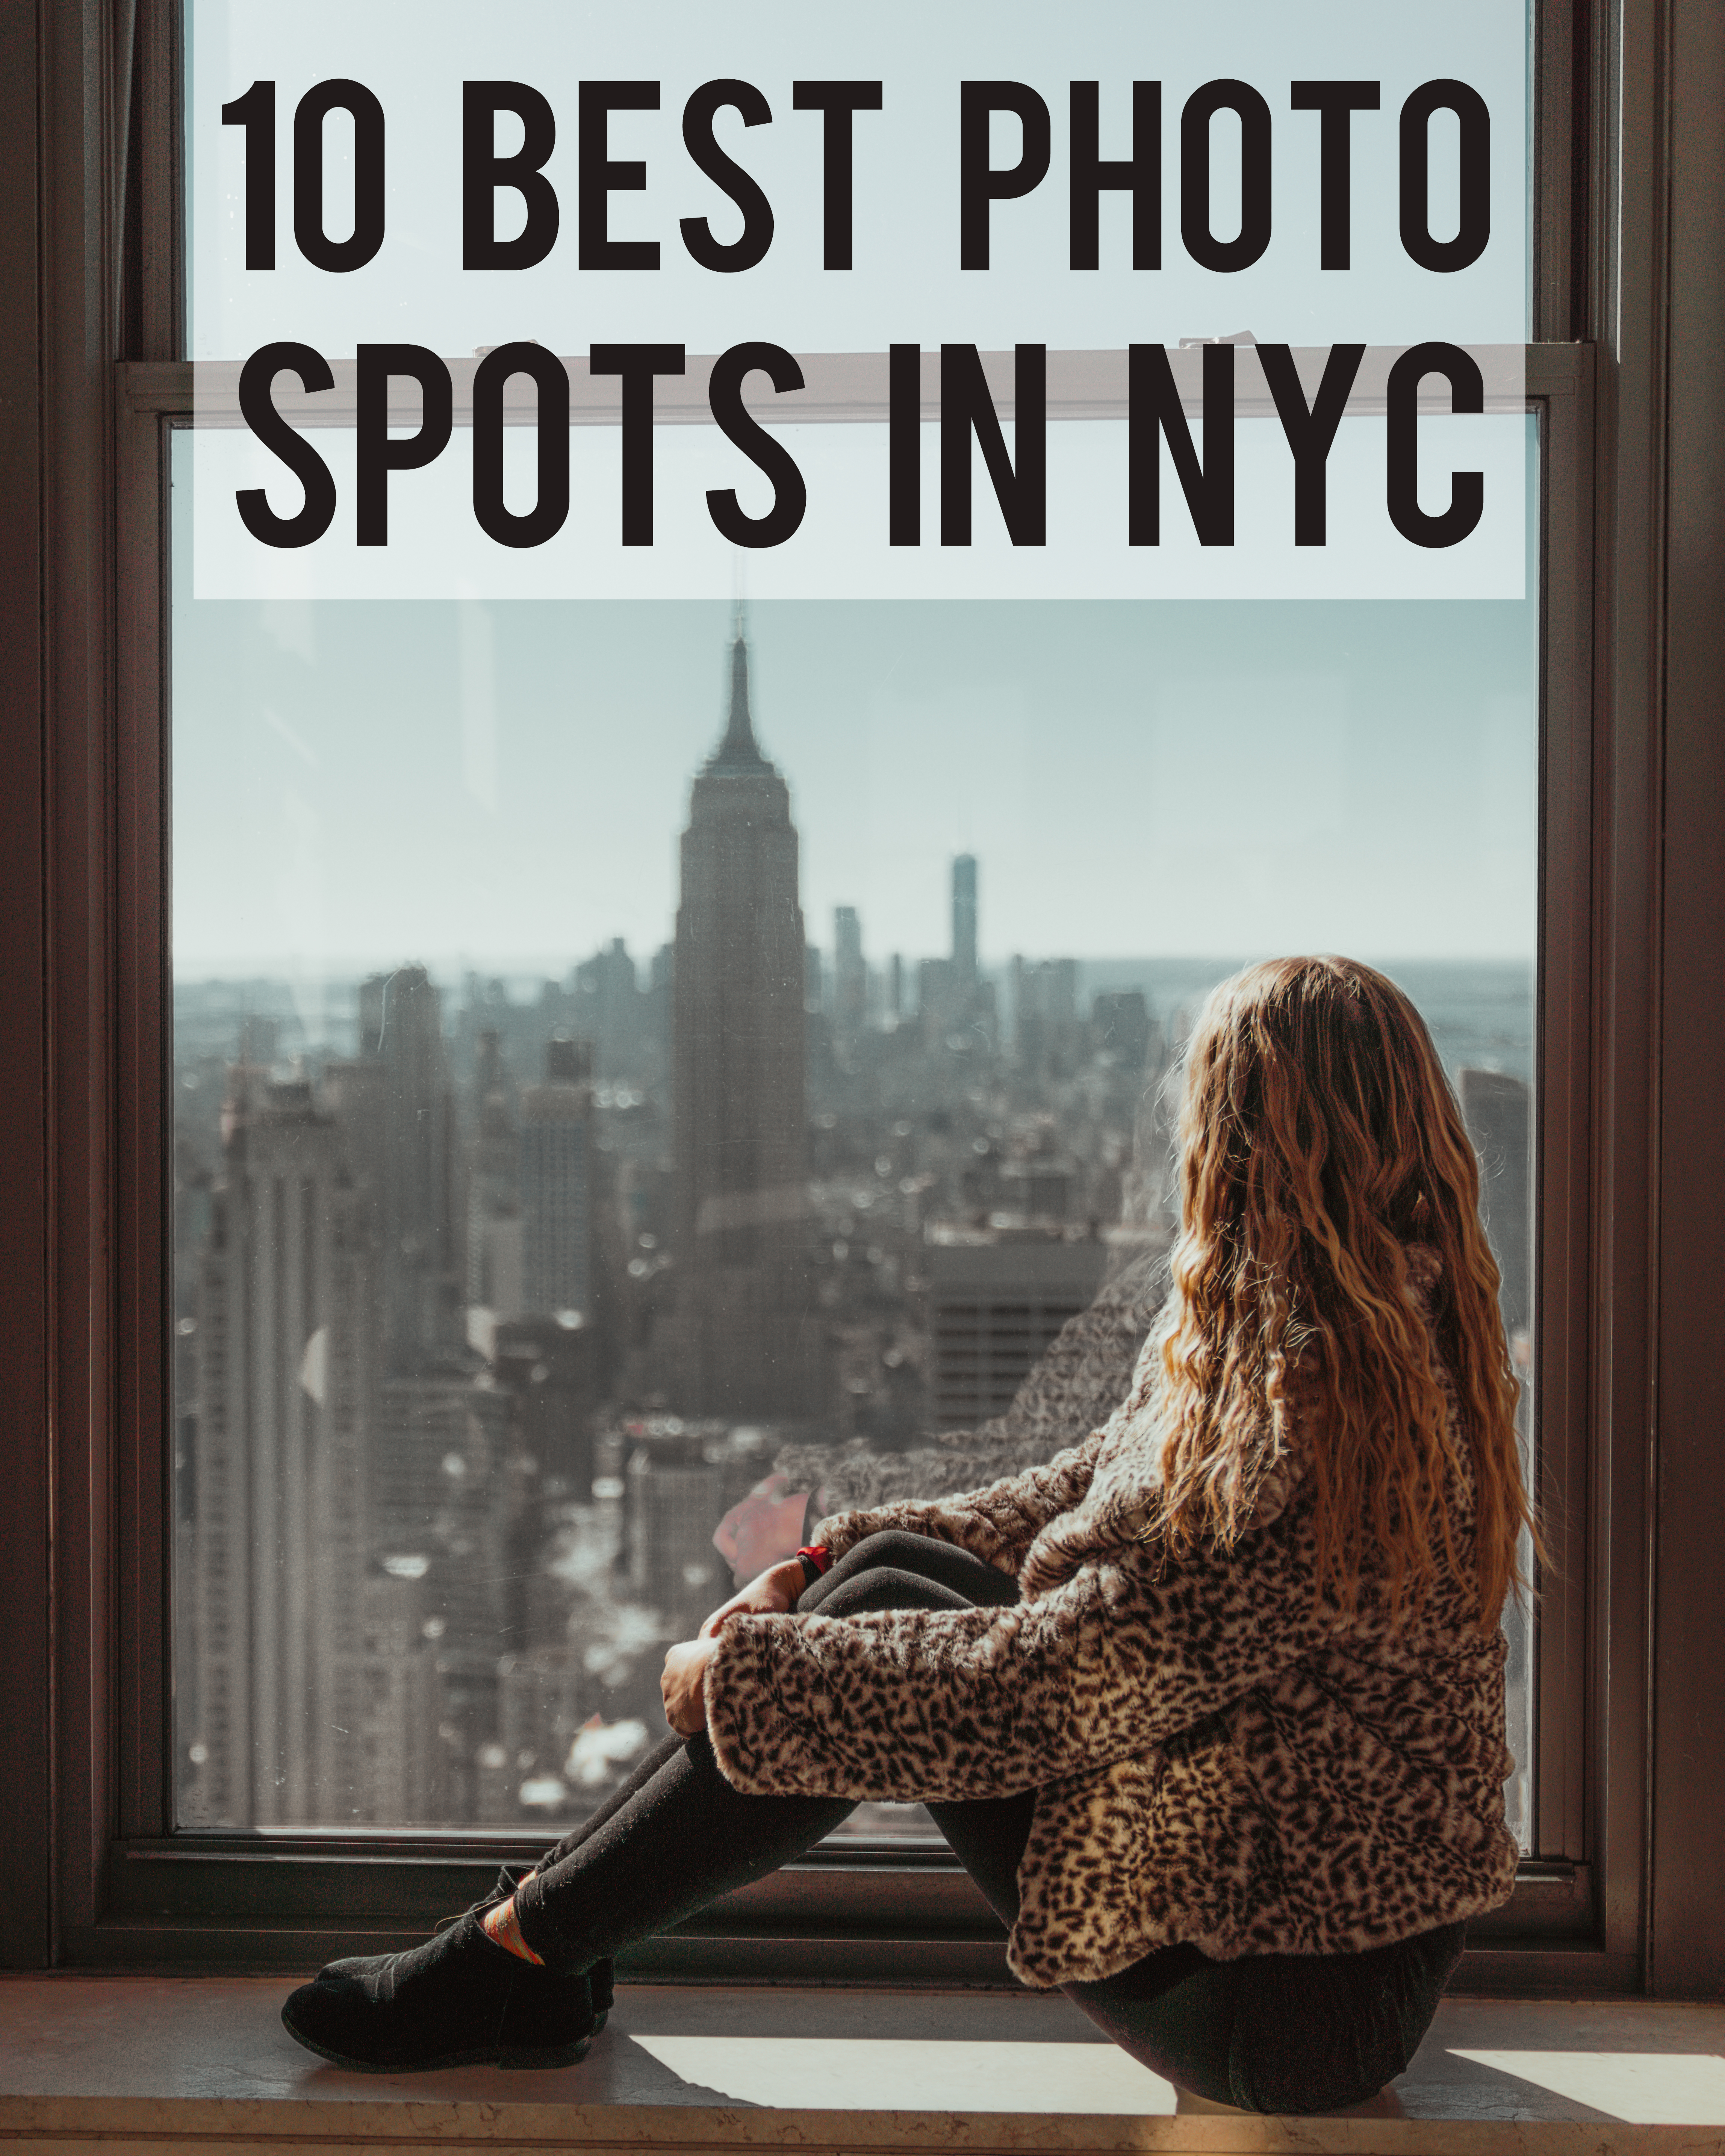 10 Best Photo Spots in NYC